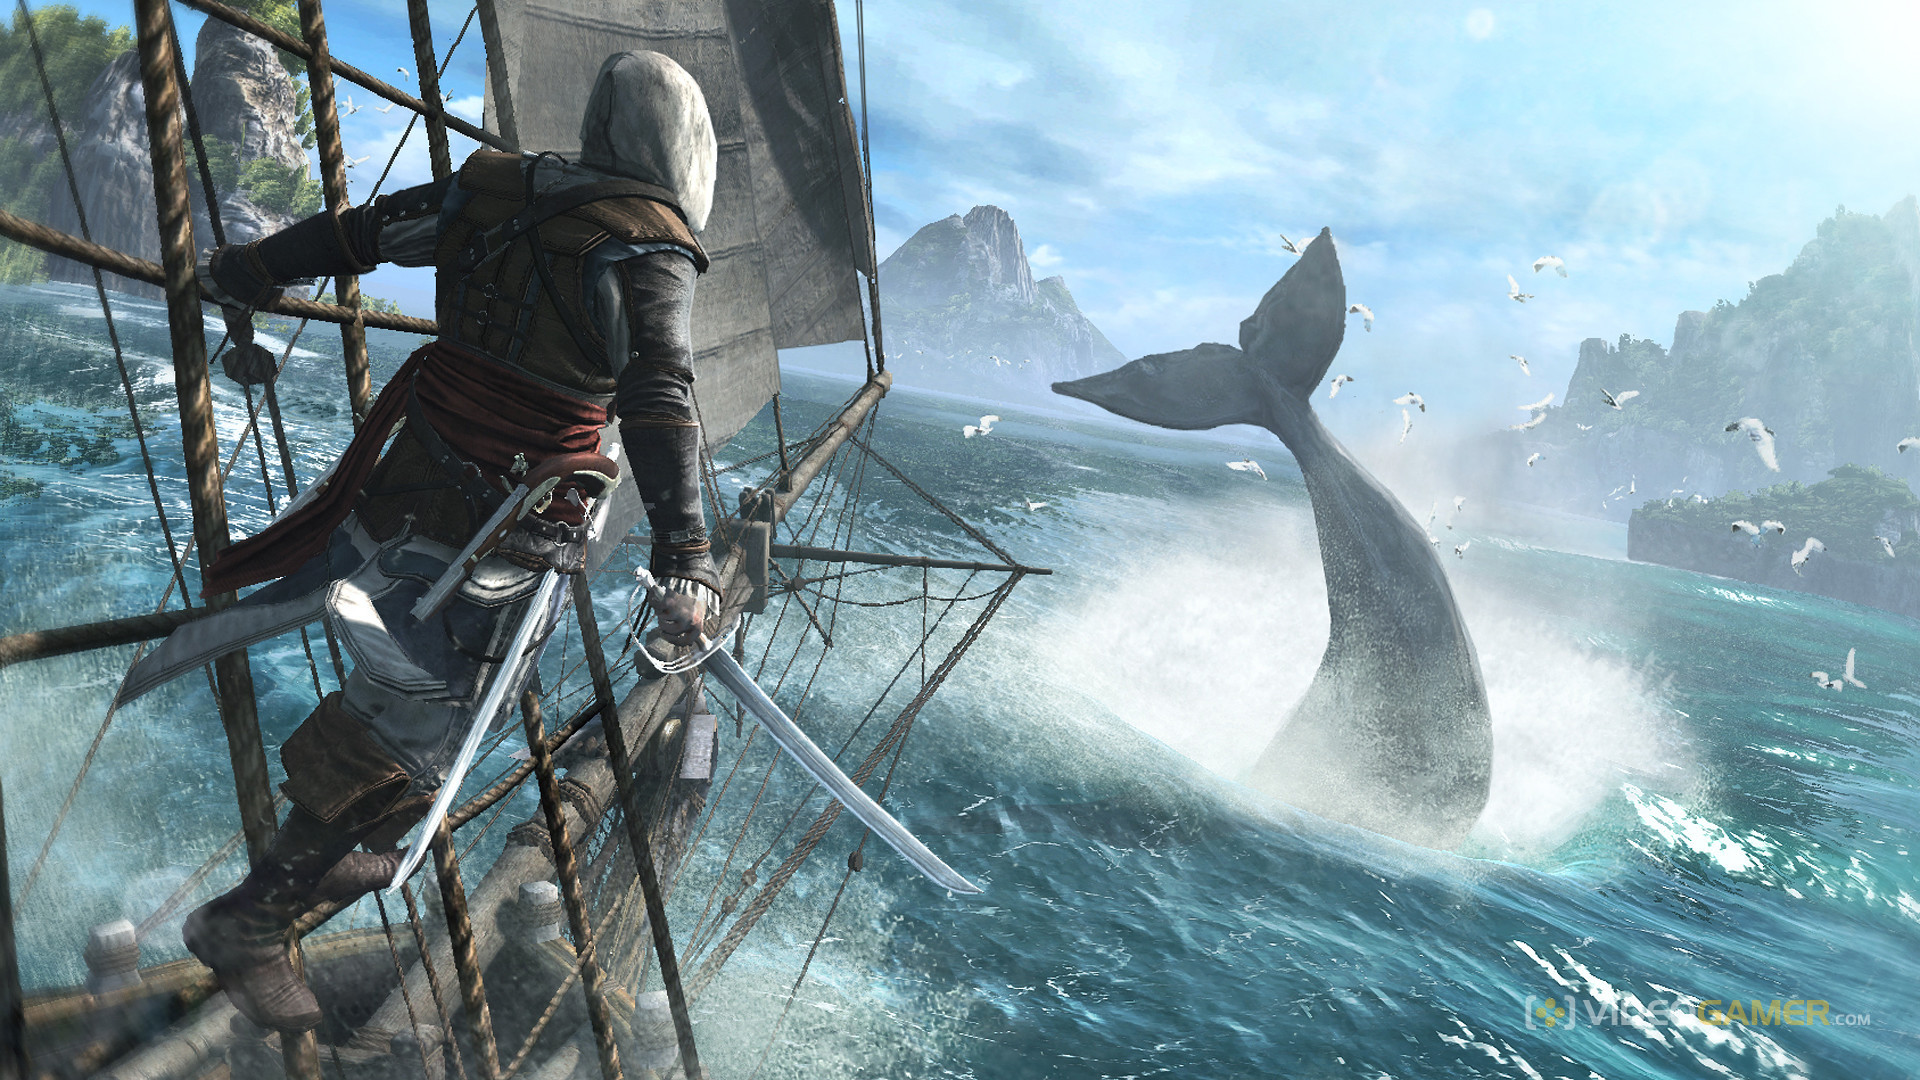 Assassin&#039;s Creed IV: Black Flag